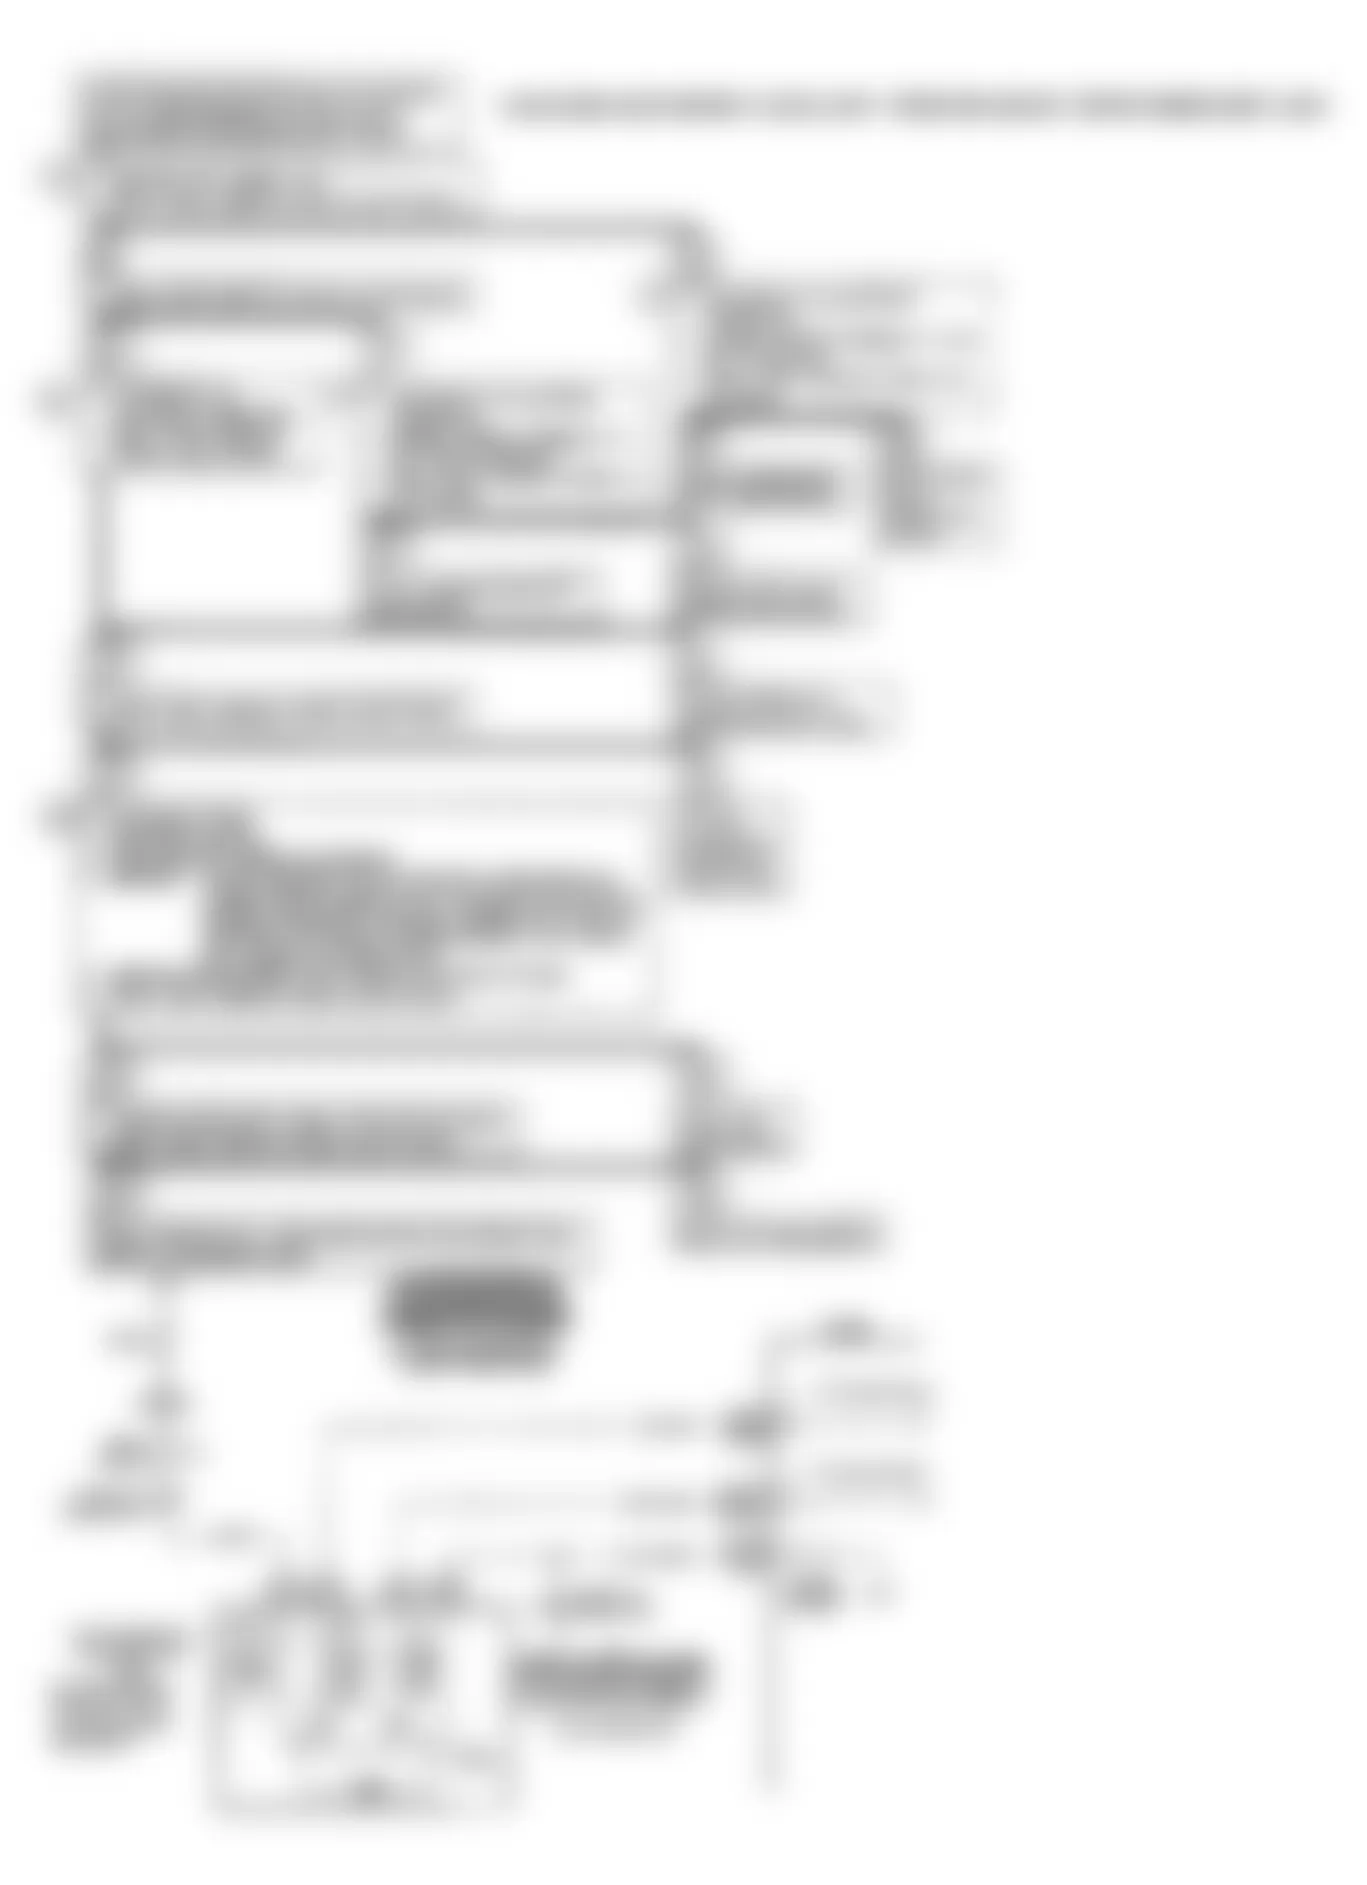 Buick Regal Gran Sport 1990 - Component Locations -  Code 62: Gear Switch Error Schematic & Flow Chart (A Body)